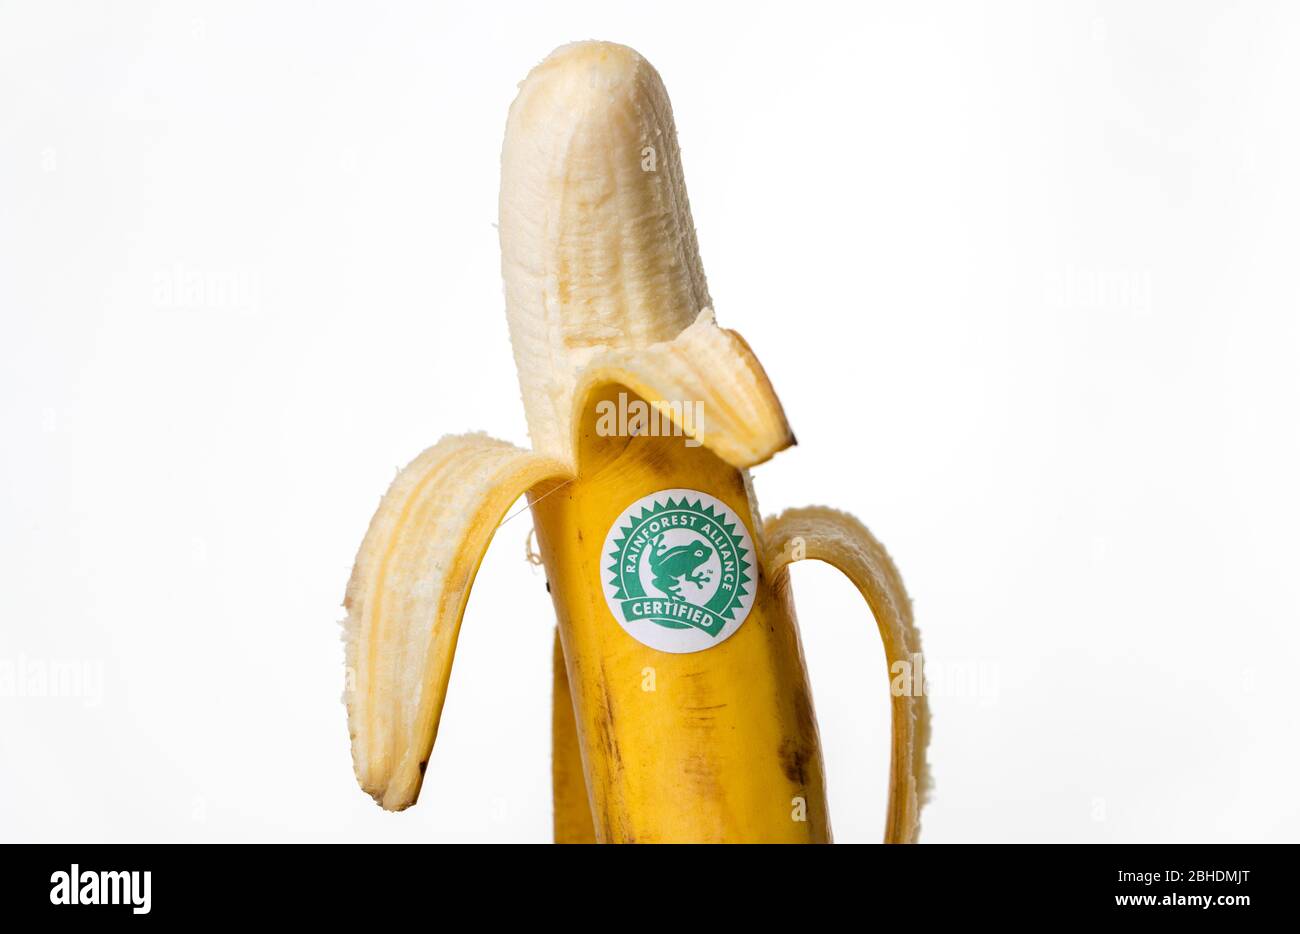 Rainforest Alliance logo sticker on a banana Stock Photo